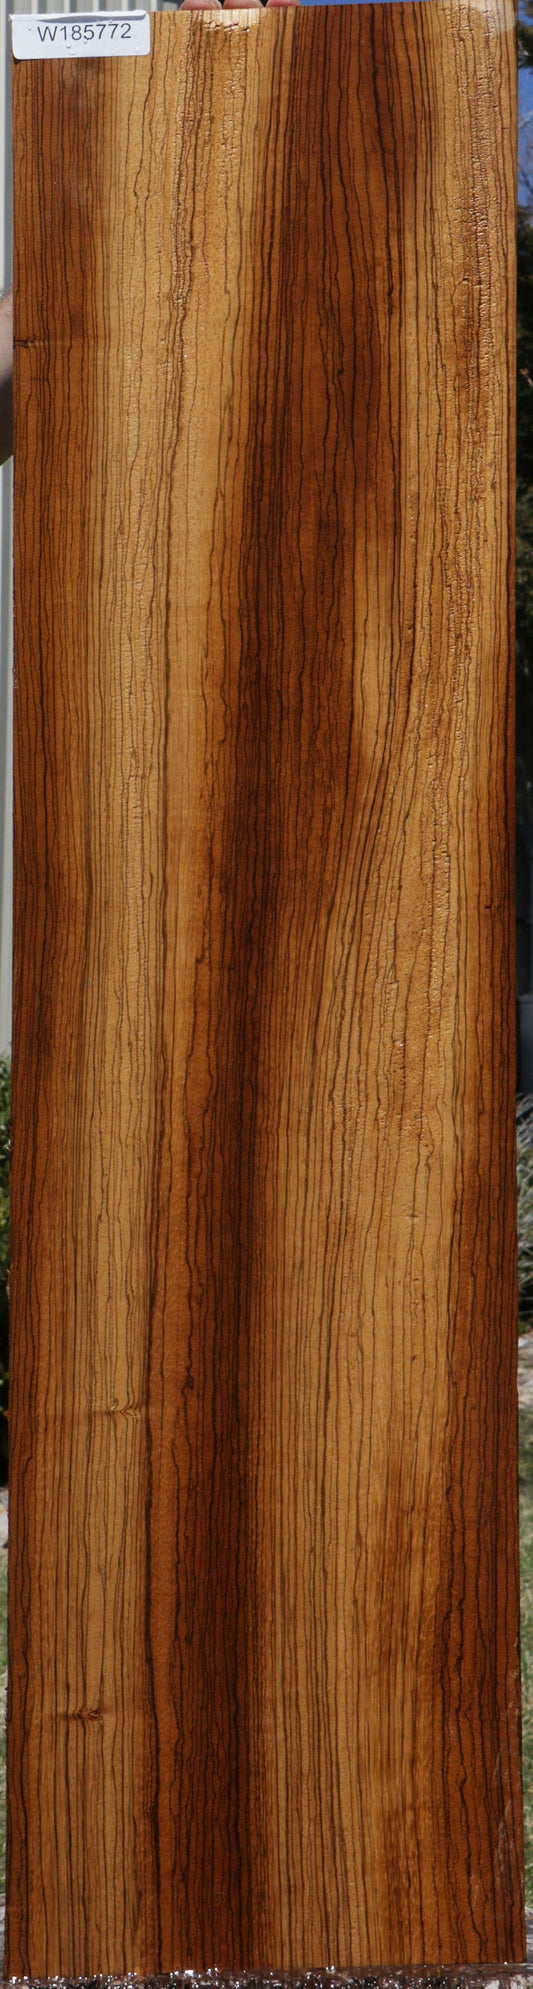 Extra Fancy Zebrawood Lumber